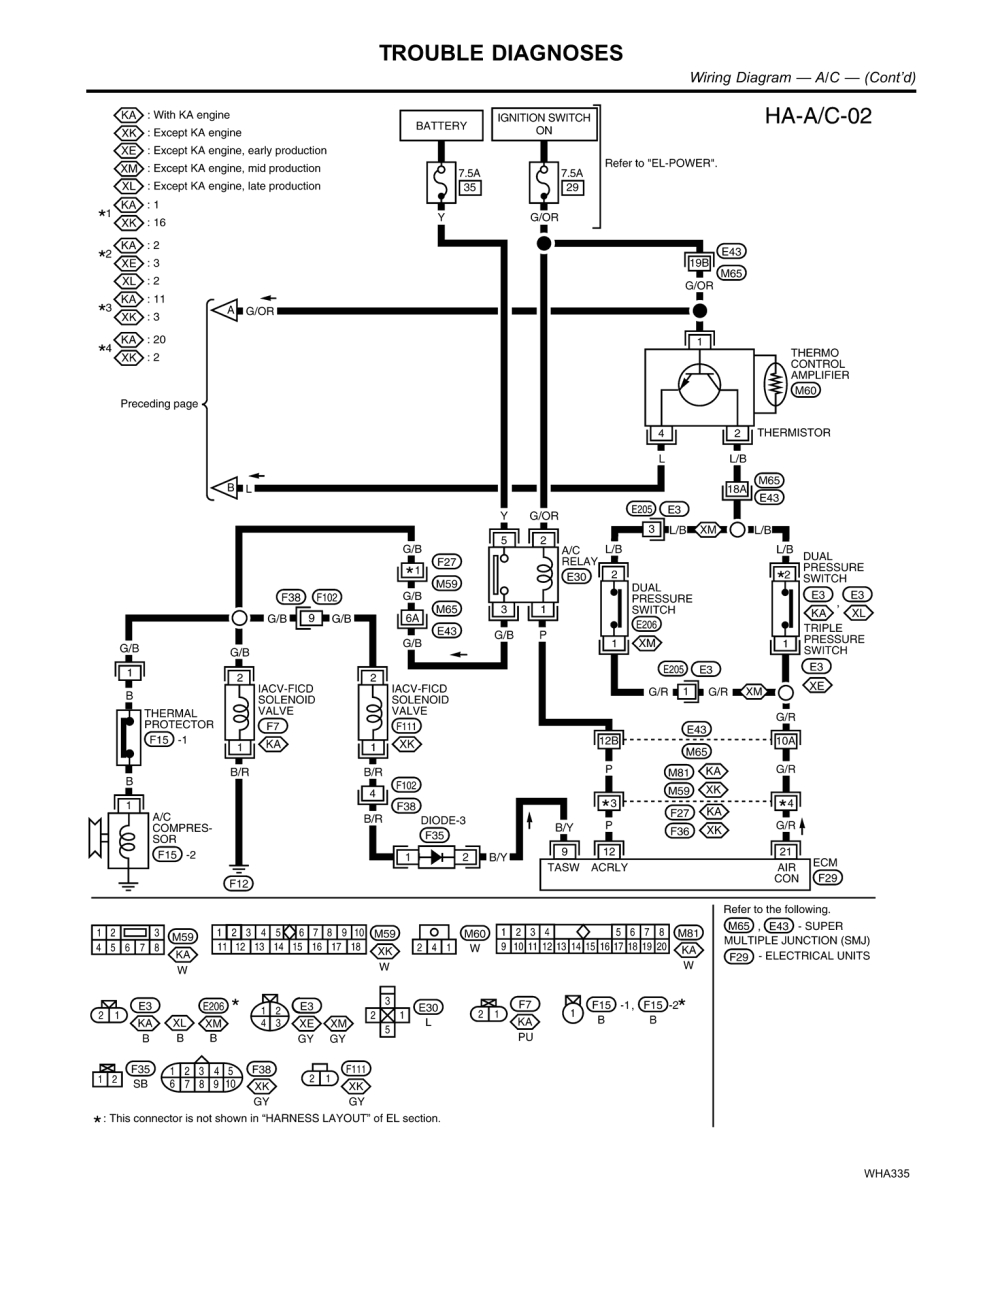 98 Nissan Frontier Radio Wiring Diagram Cd26 1998 Nissan Frontier Stereo Wiring Diagram Wiring Library